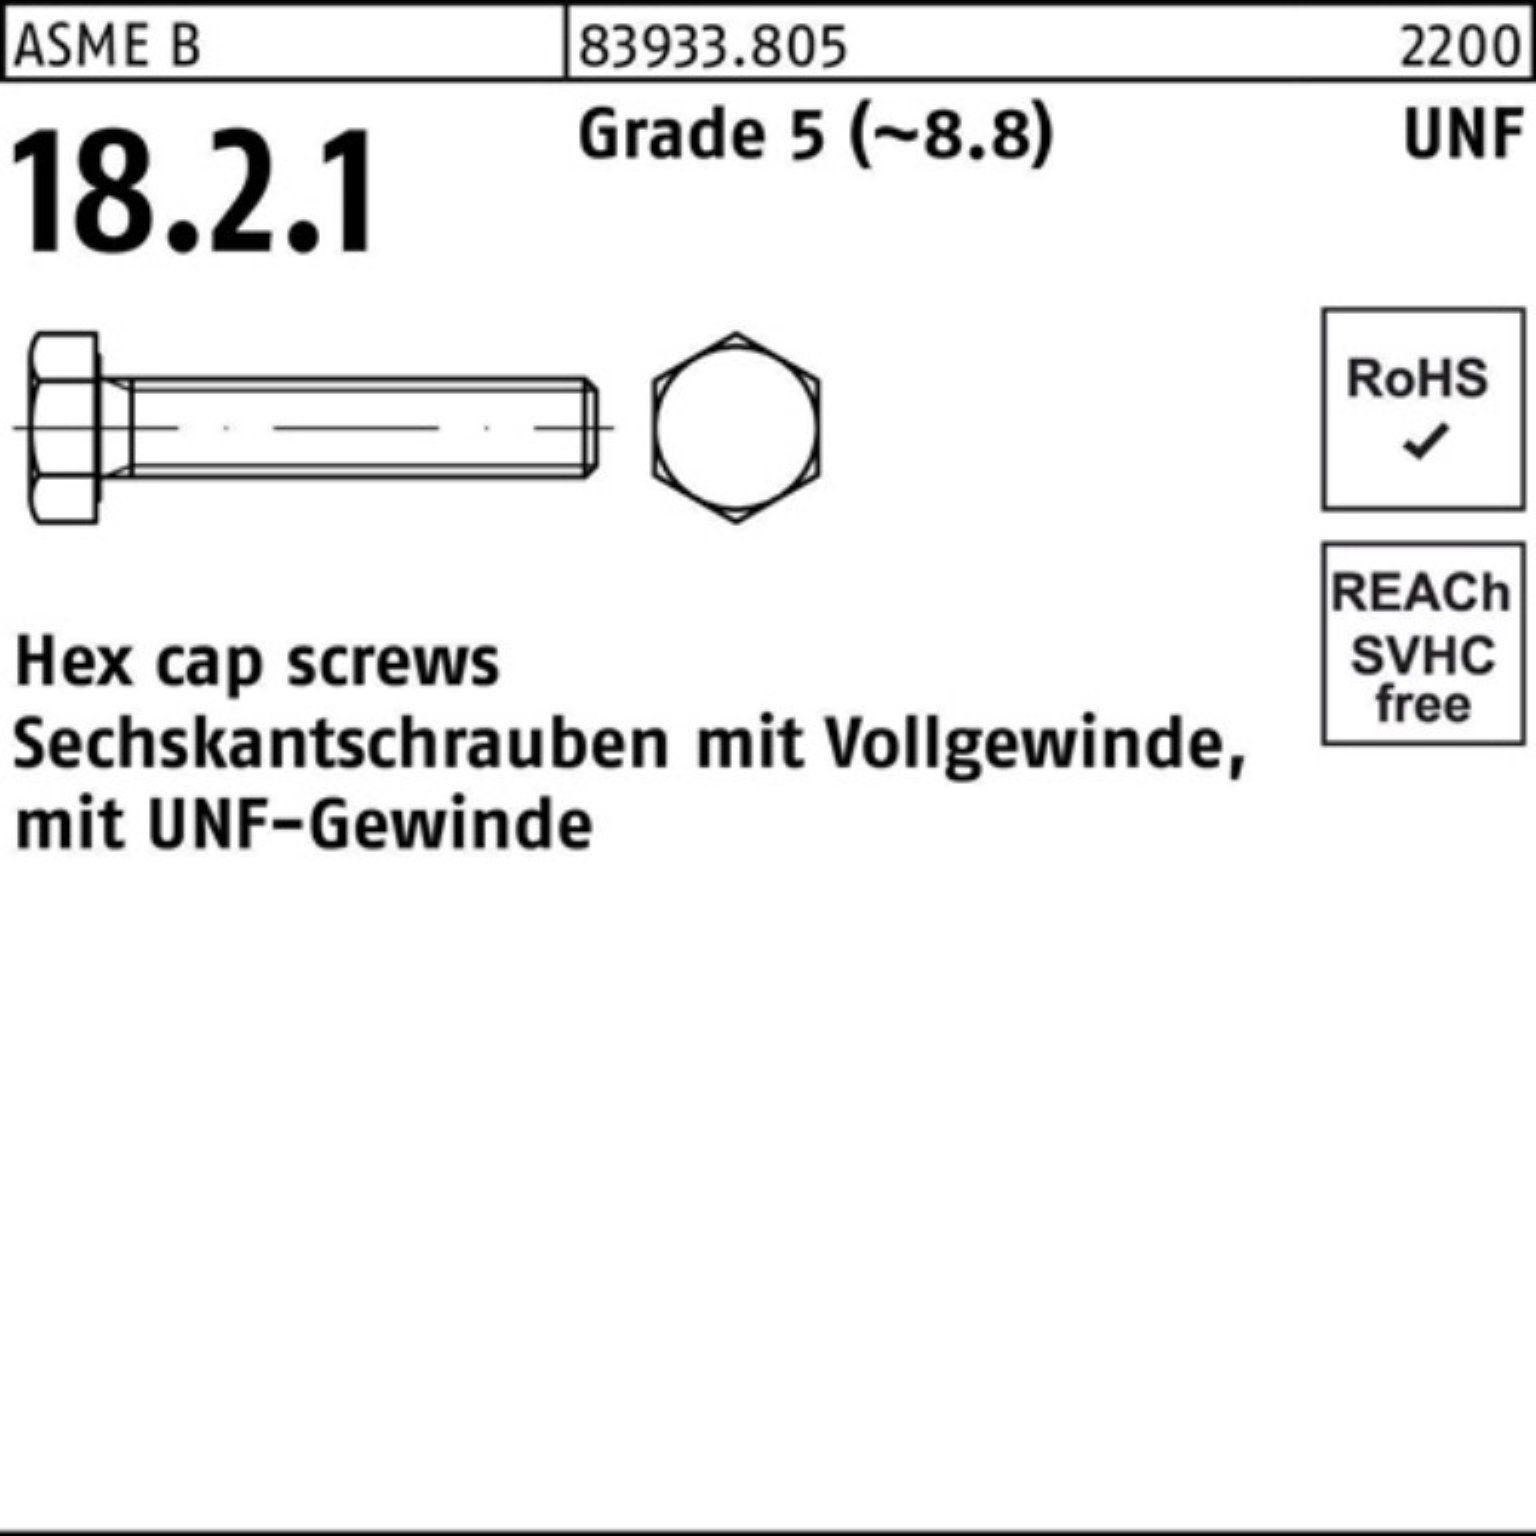 Reyher Sechskantschraube 100er Pack Sechskantschraube R 83933 UNF-Gewinde VG 5/16x 3/4 Grade 5